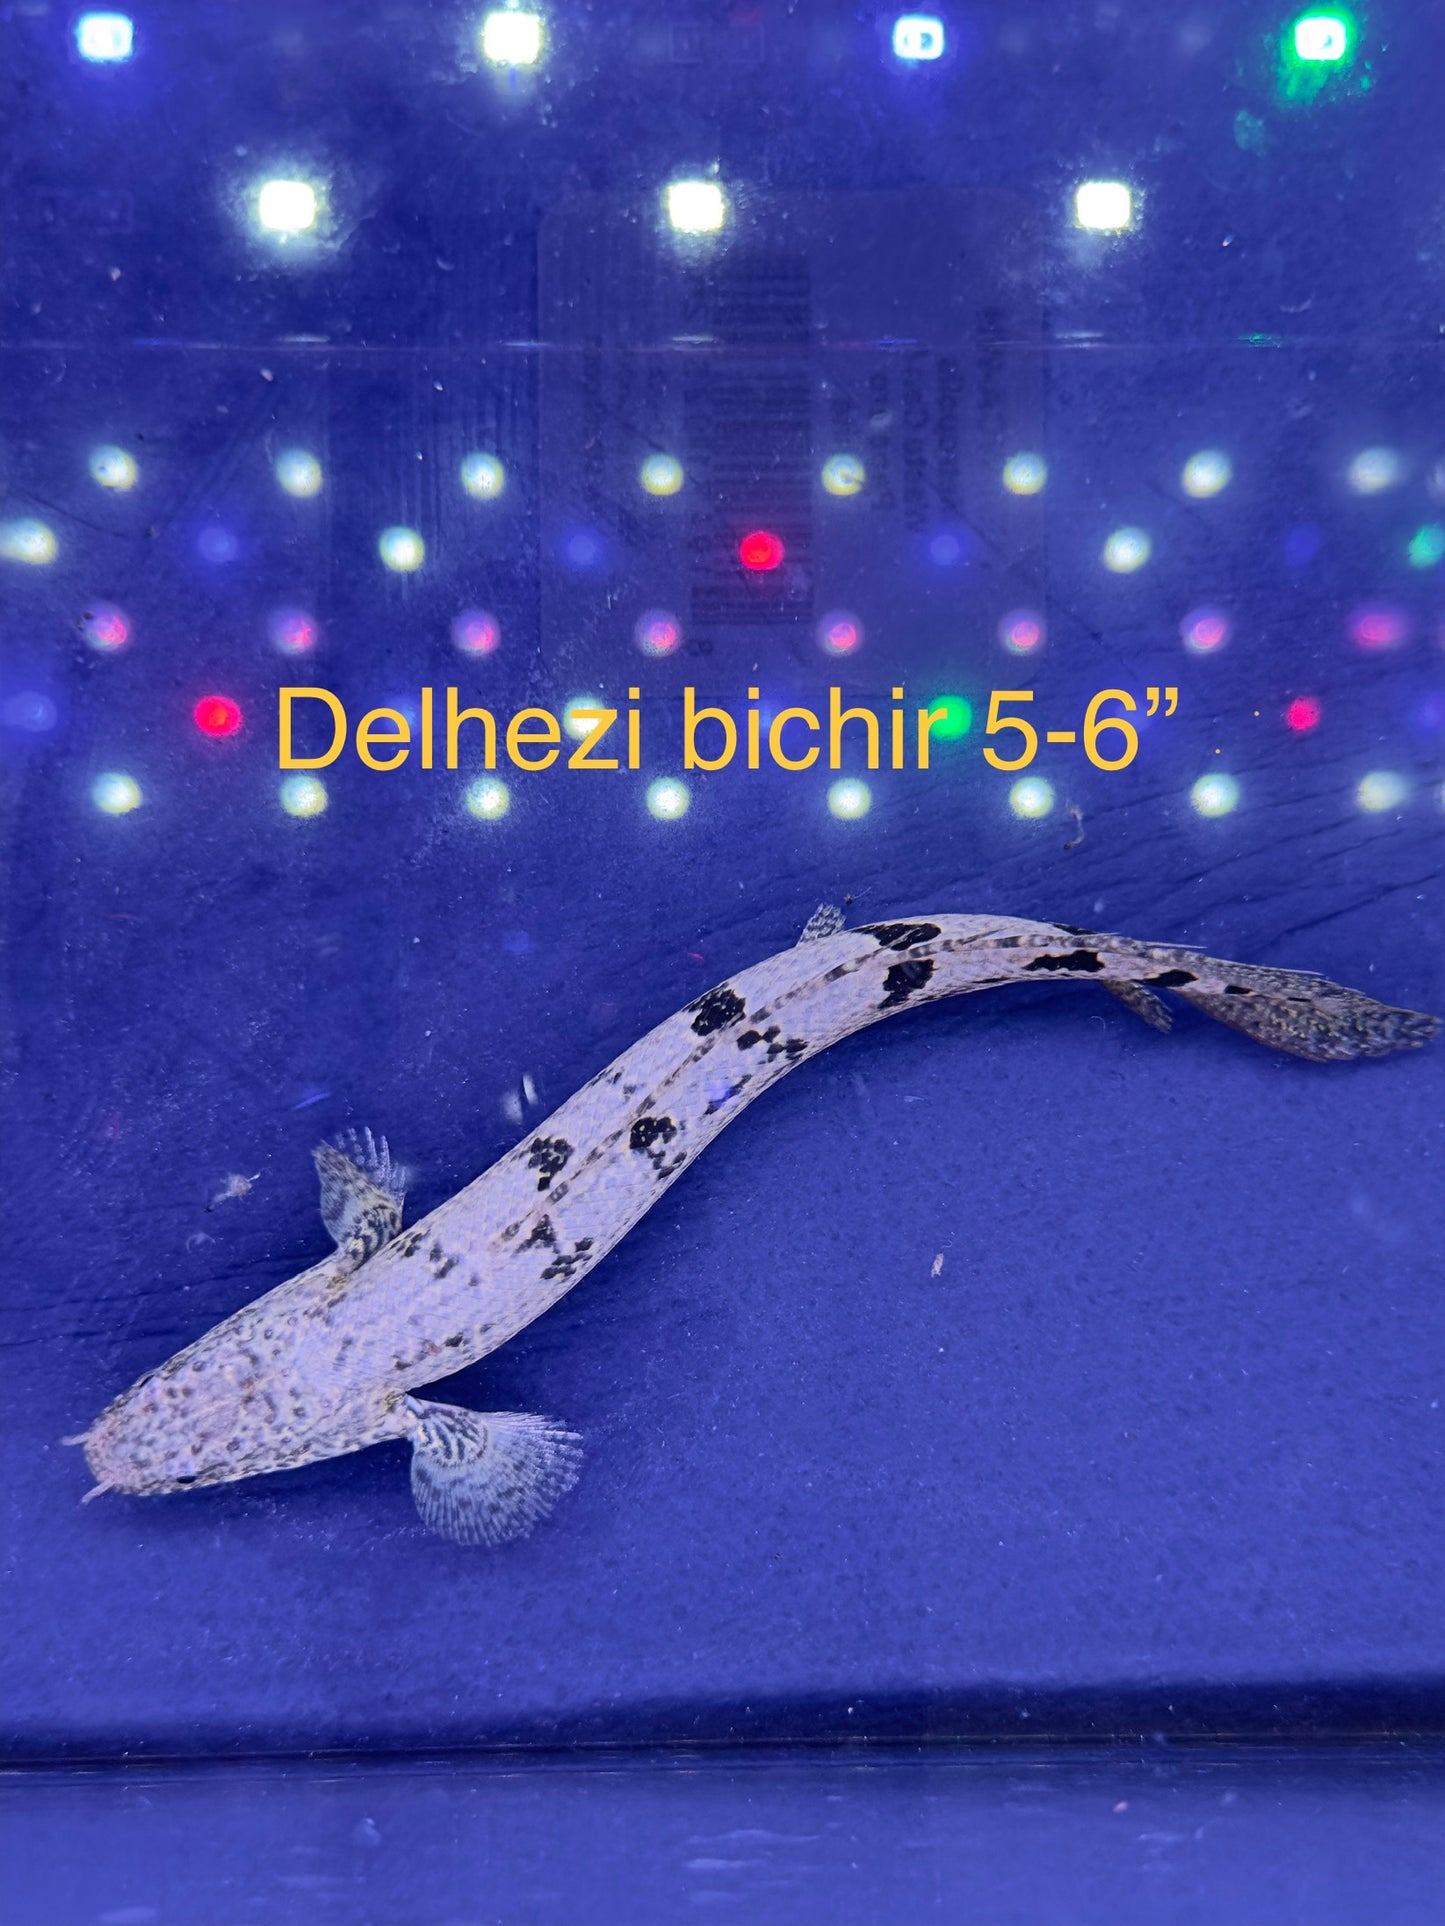 Delhezi5-6”